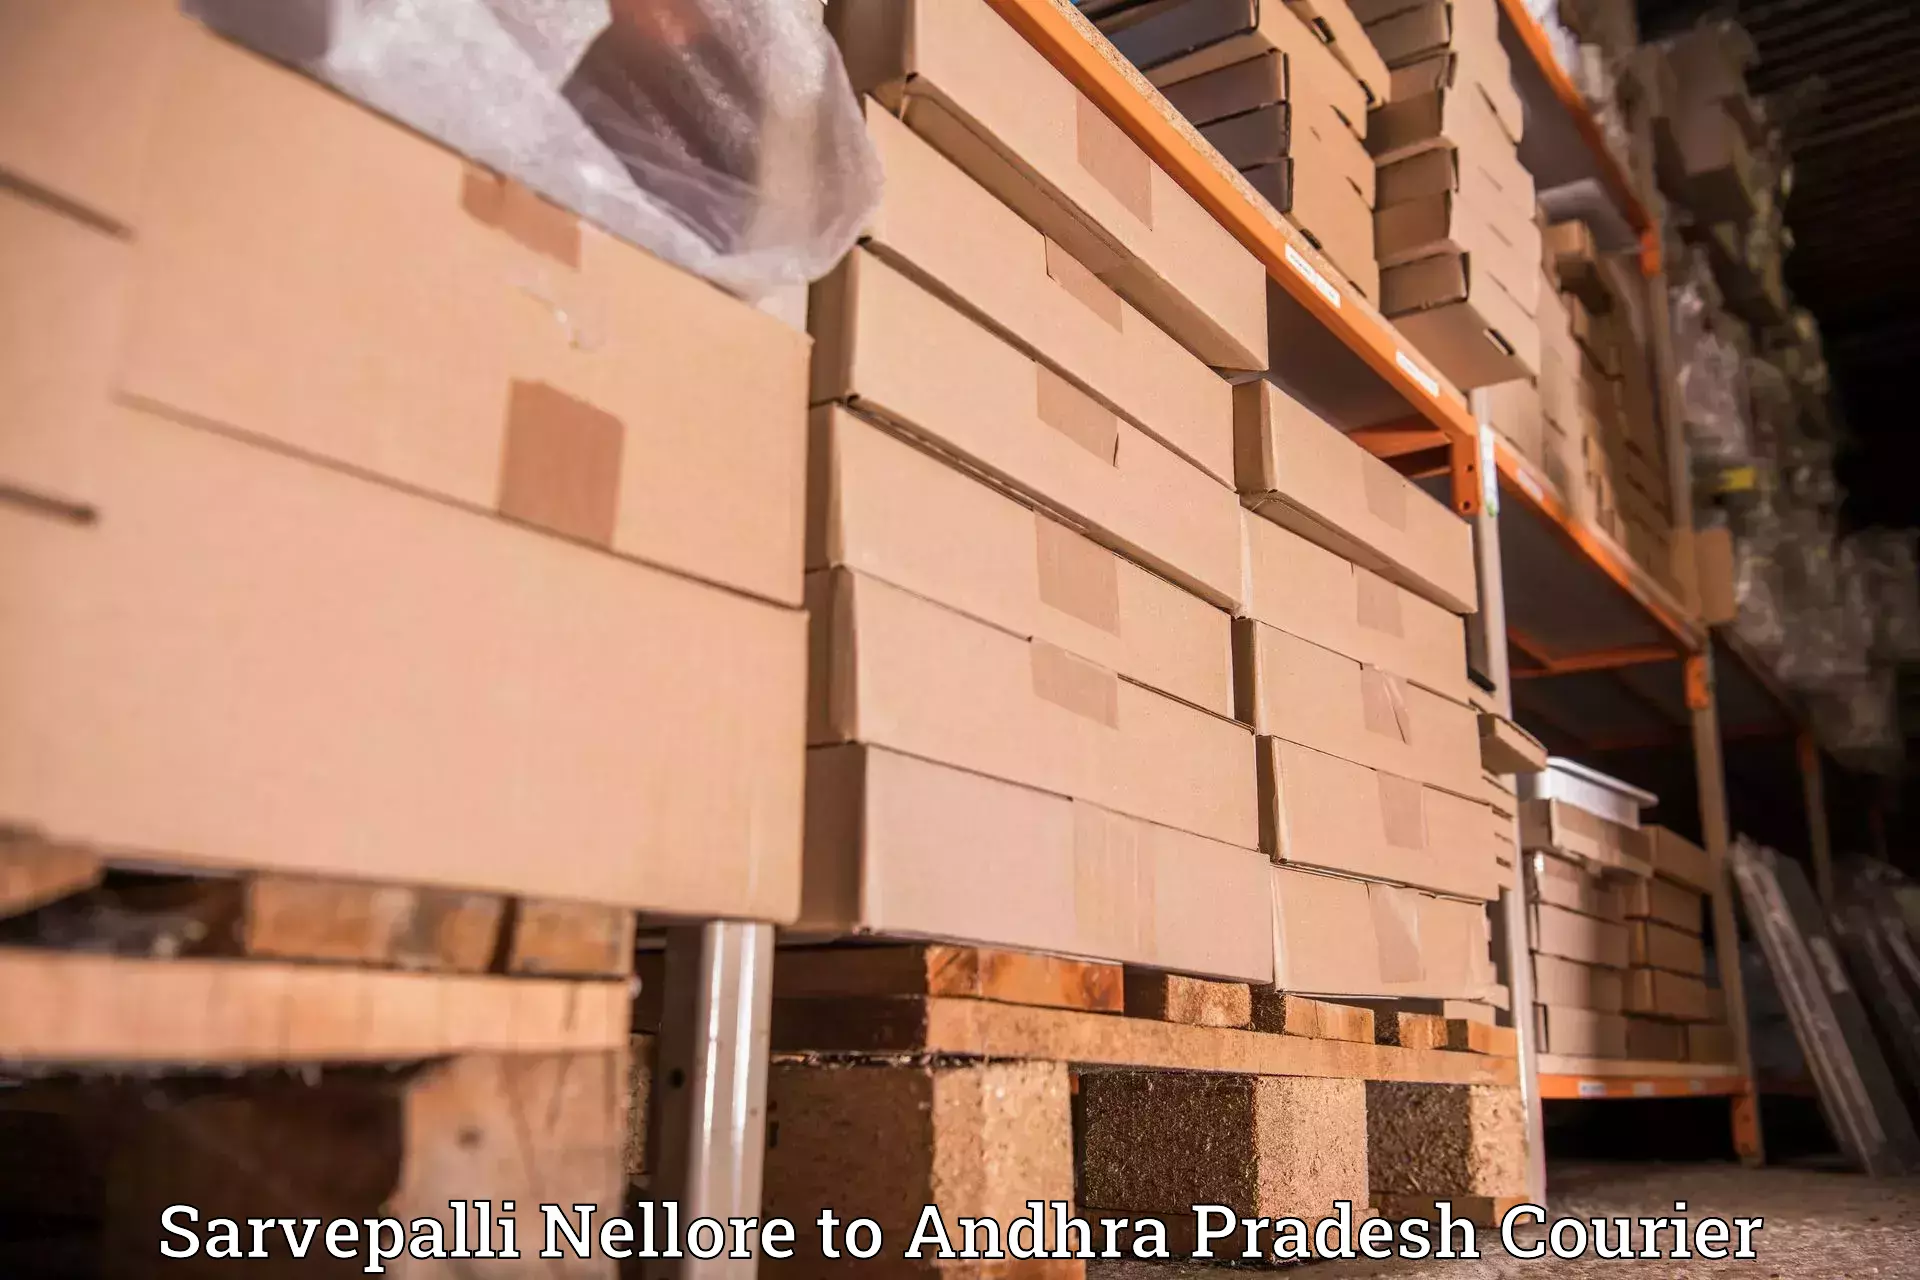 High-speed delivery Sarvepalli Nellore to Visakhapatnam Port